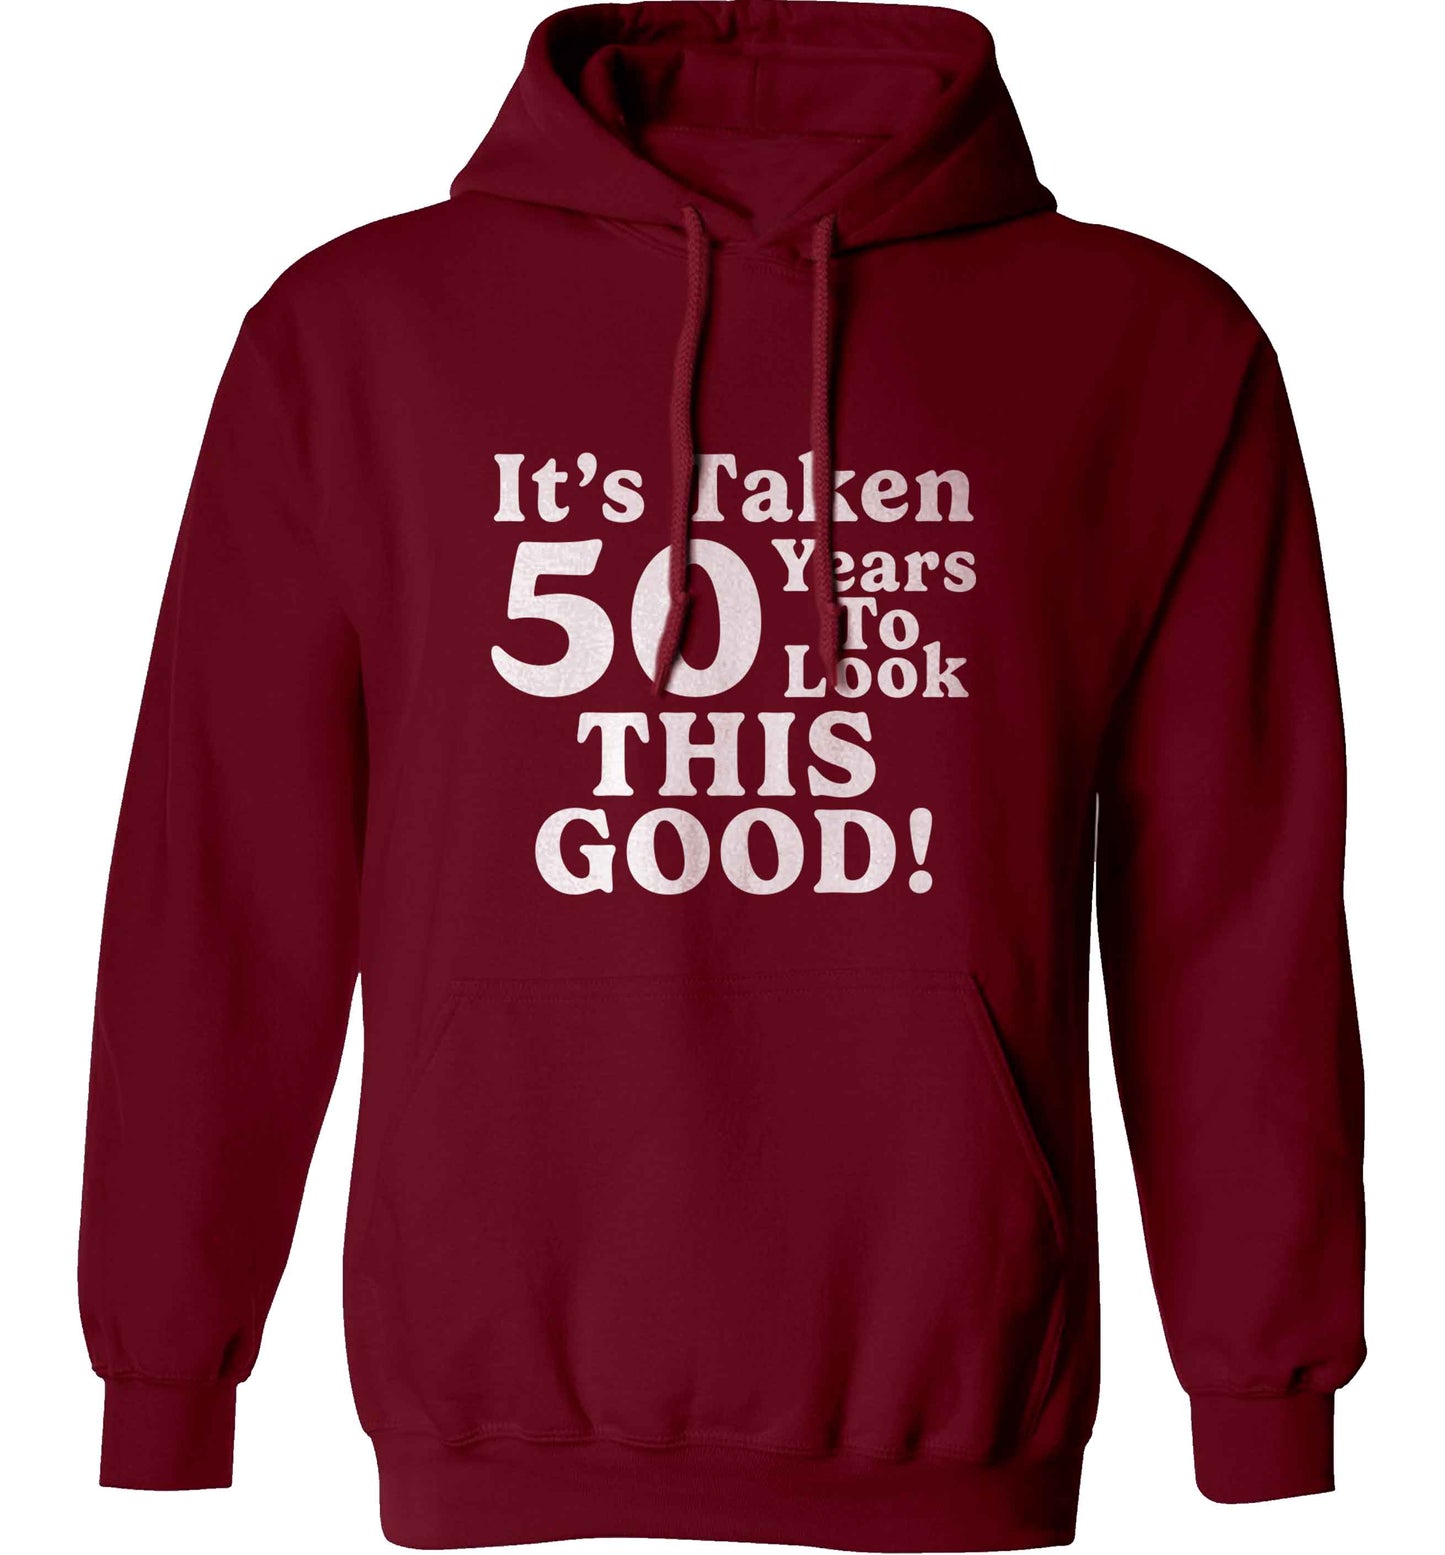 It's taken 50 years to look this good! adults unisex maroon hoodie 2XL